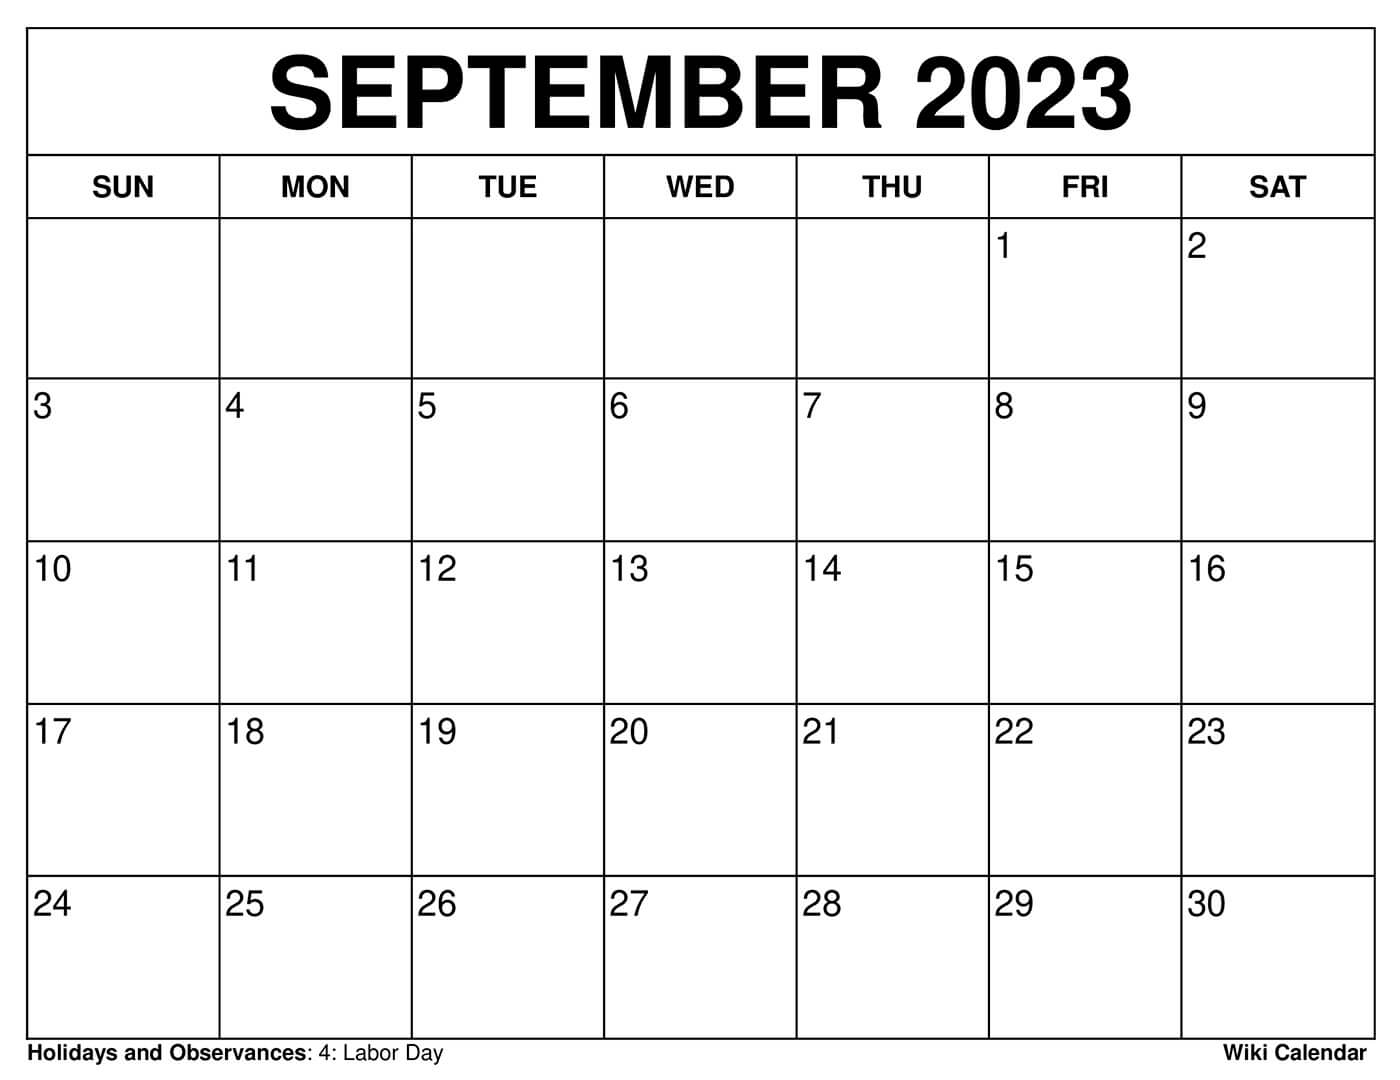 Free Printable September 2022 Calendar Free Printable September 2022 Calendars - Wiki Calendar